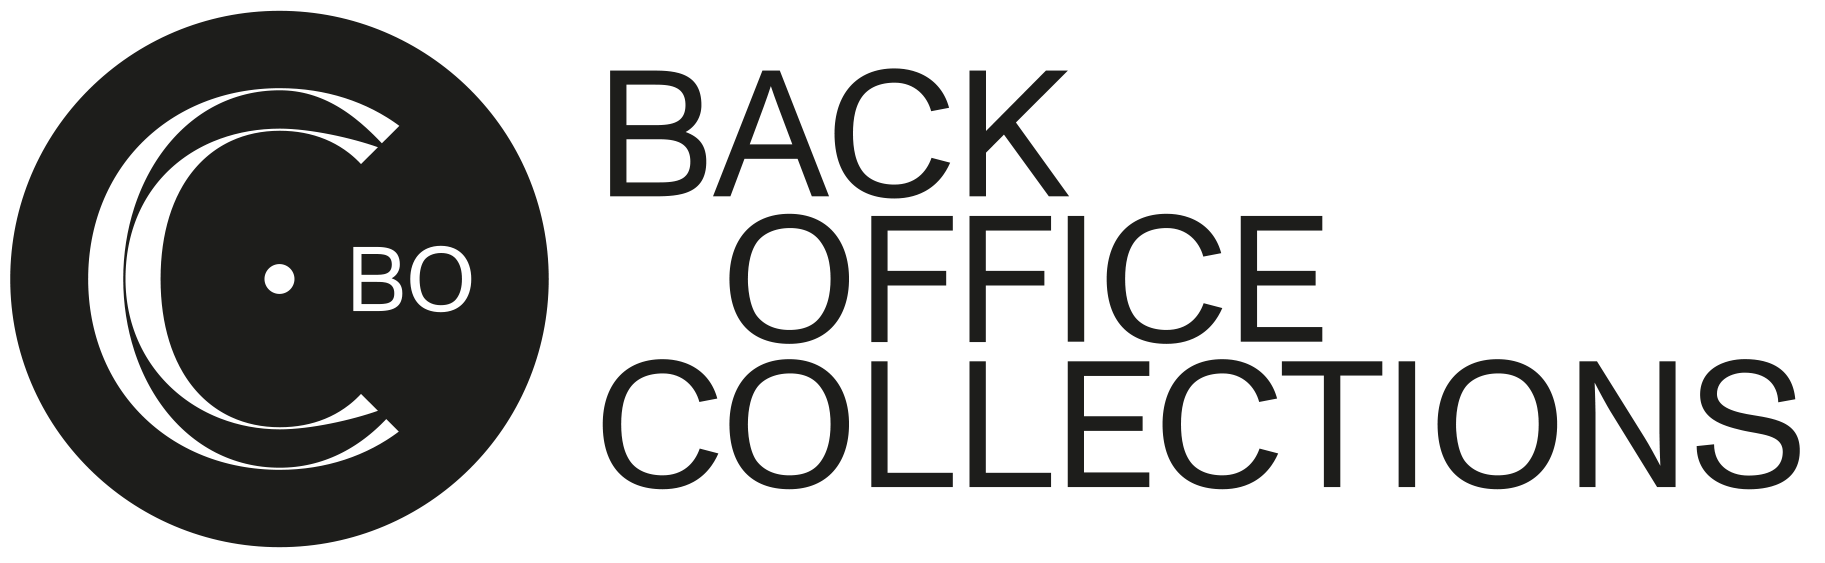 rightback logo